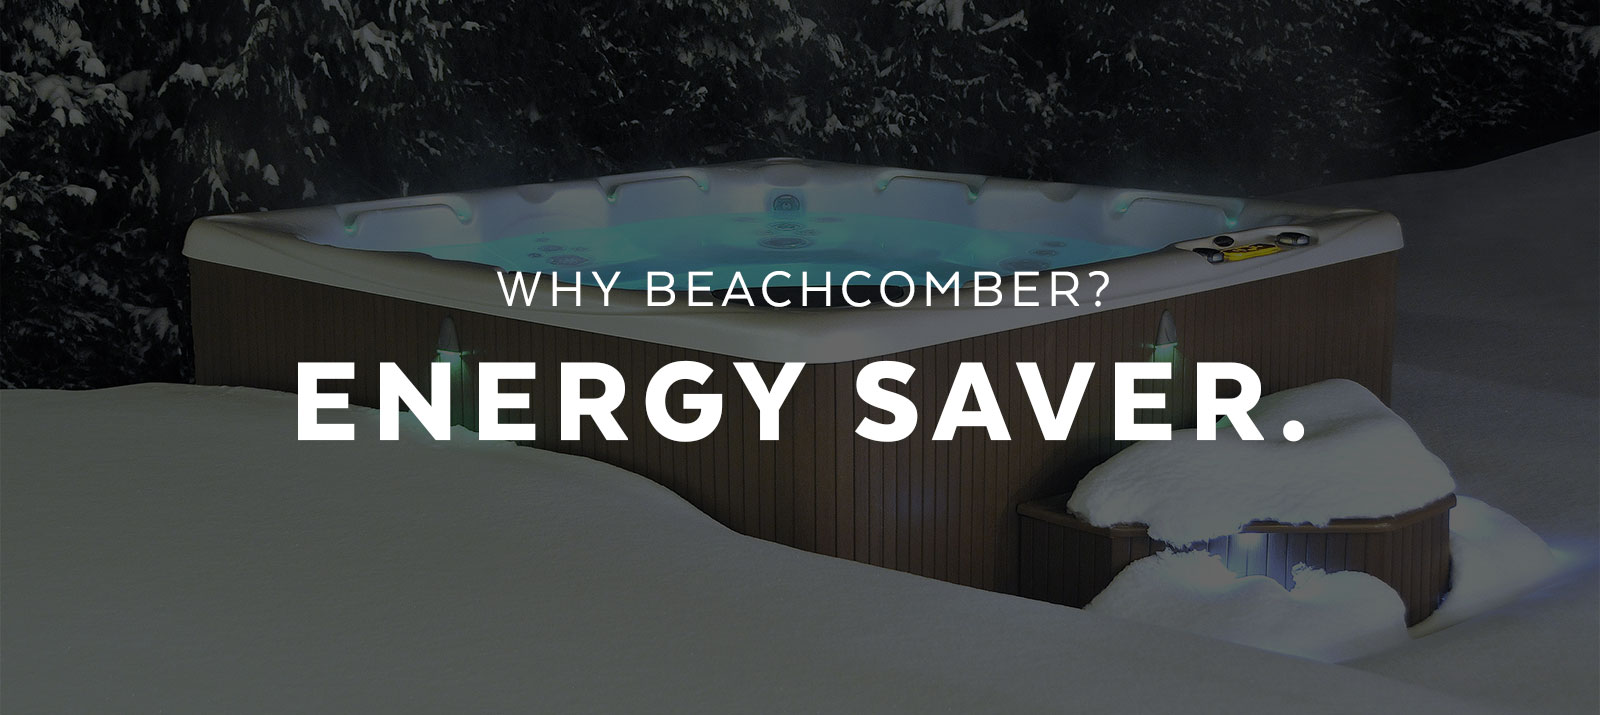 Why Beachcomber? Energy Saver.